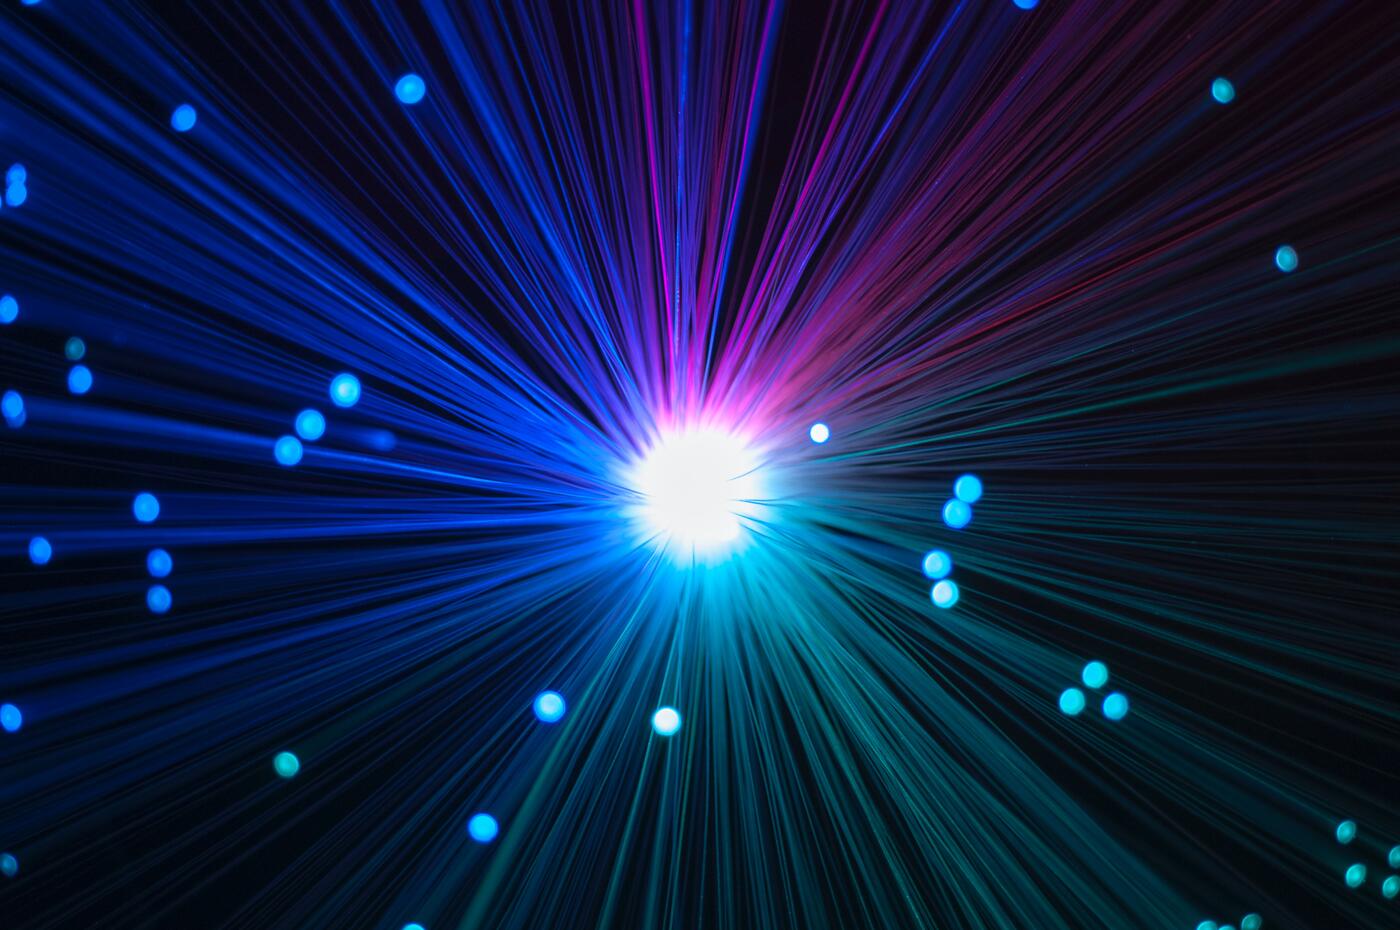 Fiber optic cables create colors that streak toward a center light